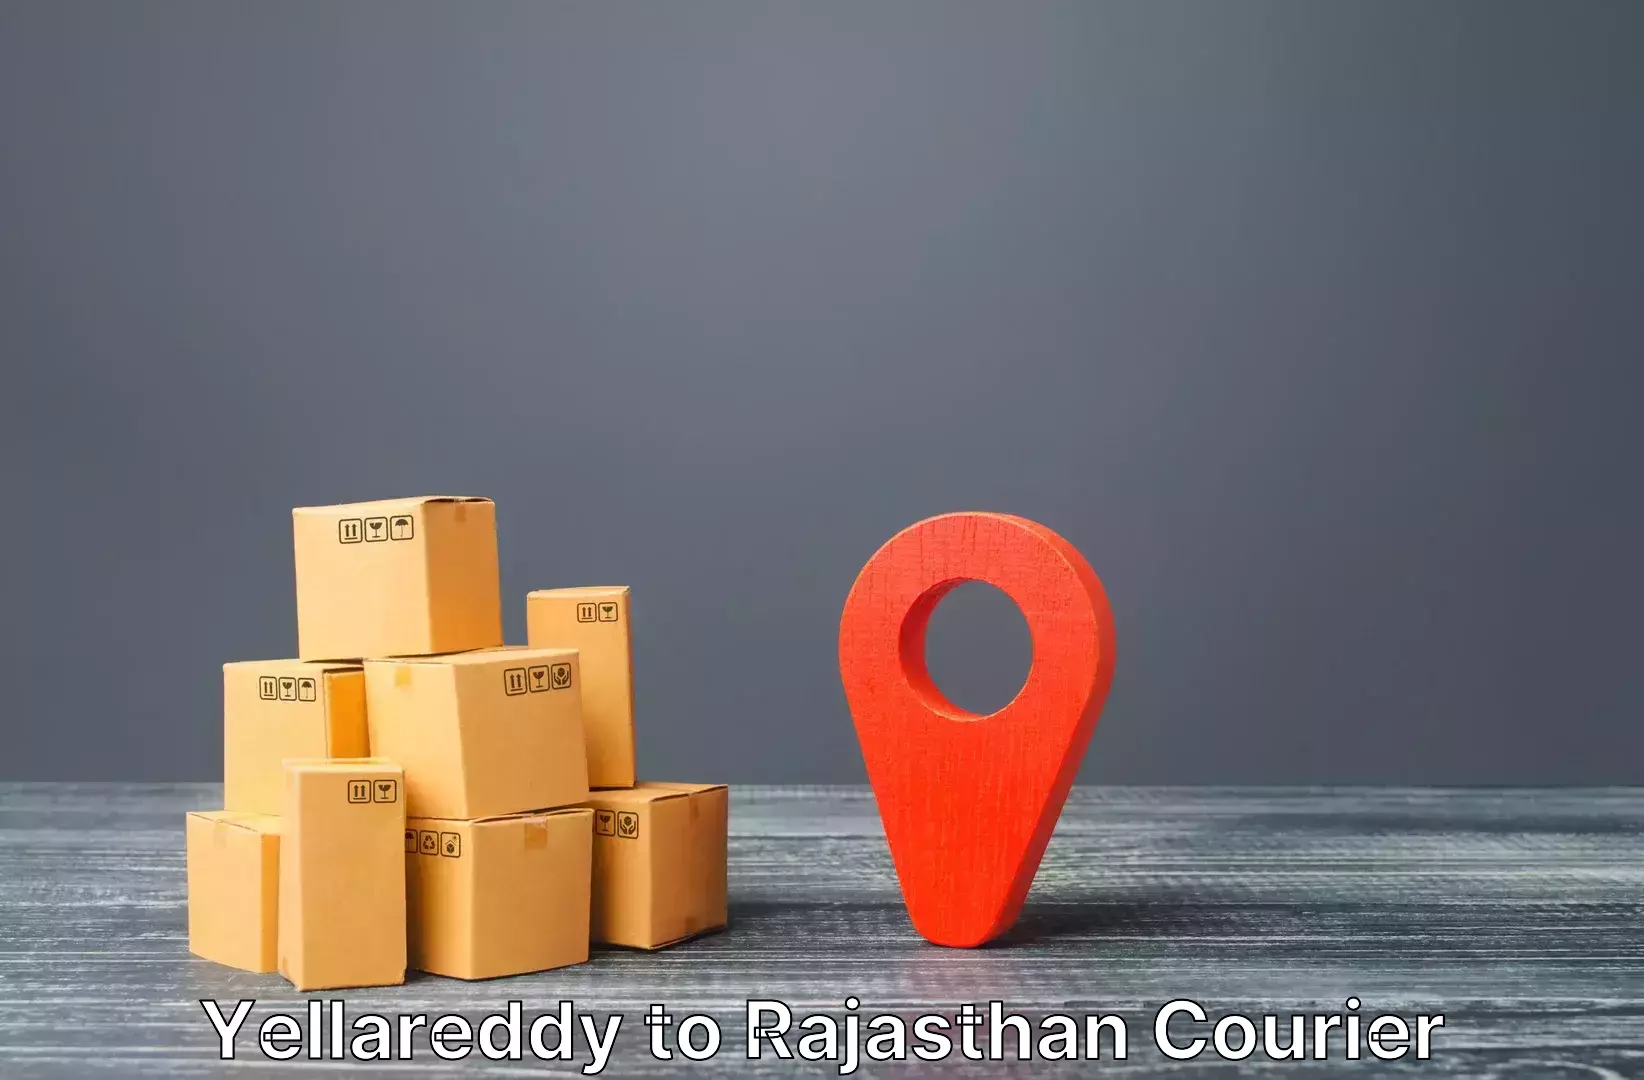 Same day luggage service Yellareddy to Rajasthan